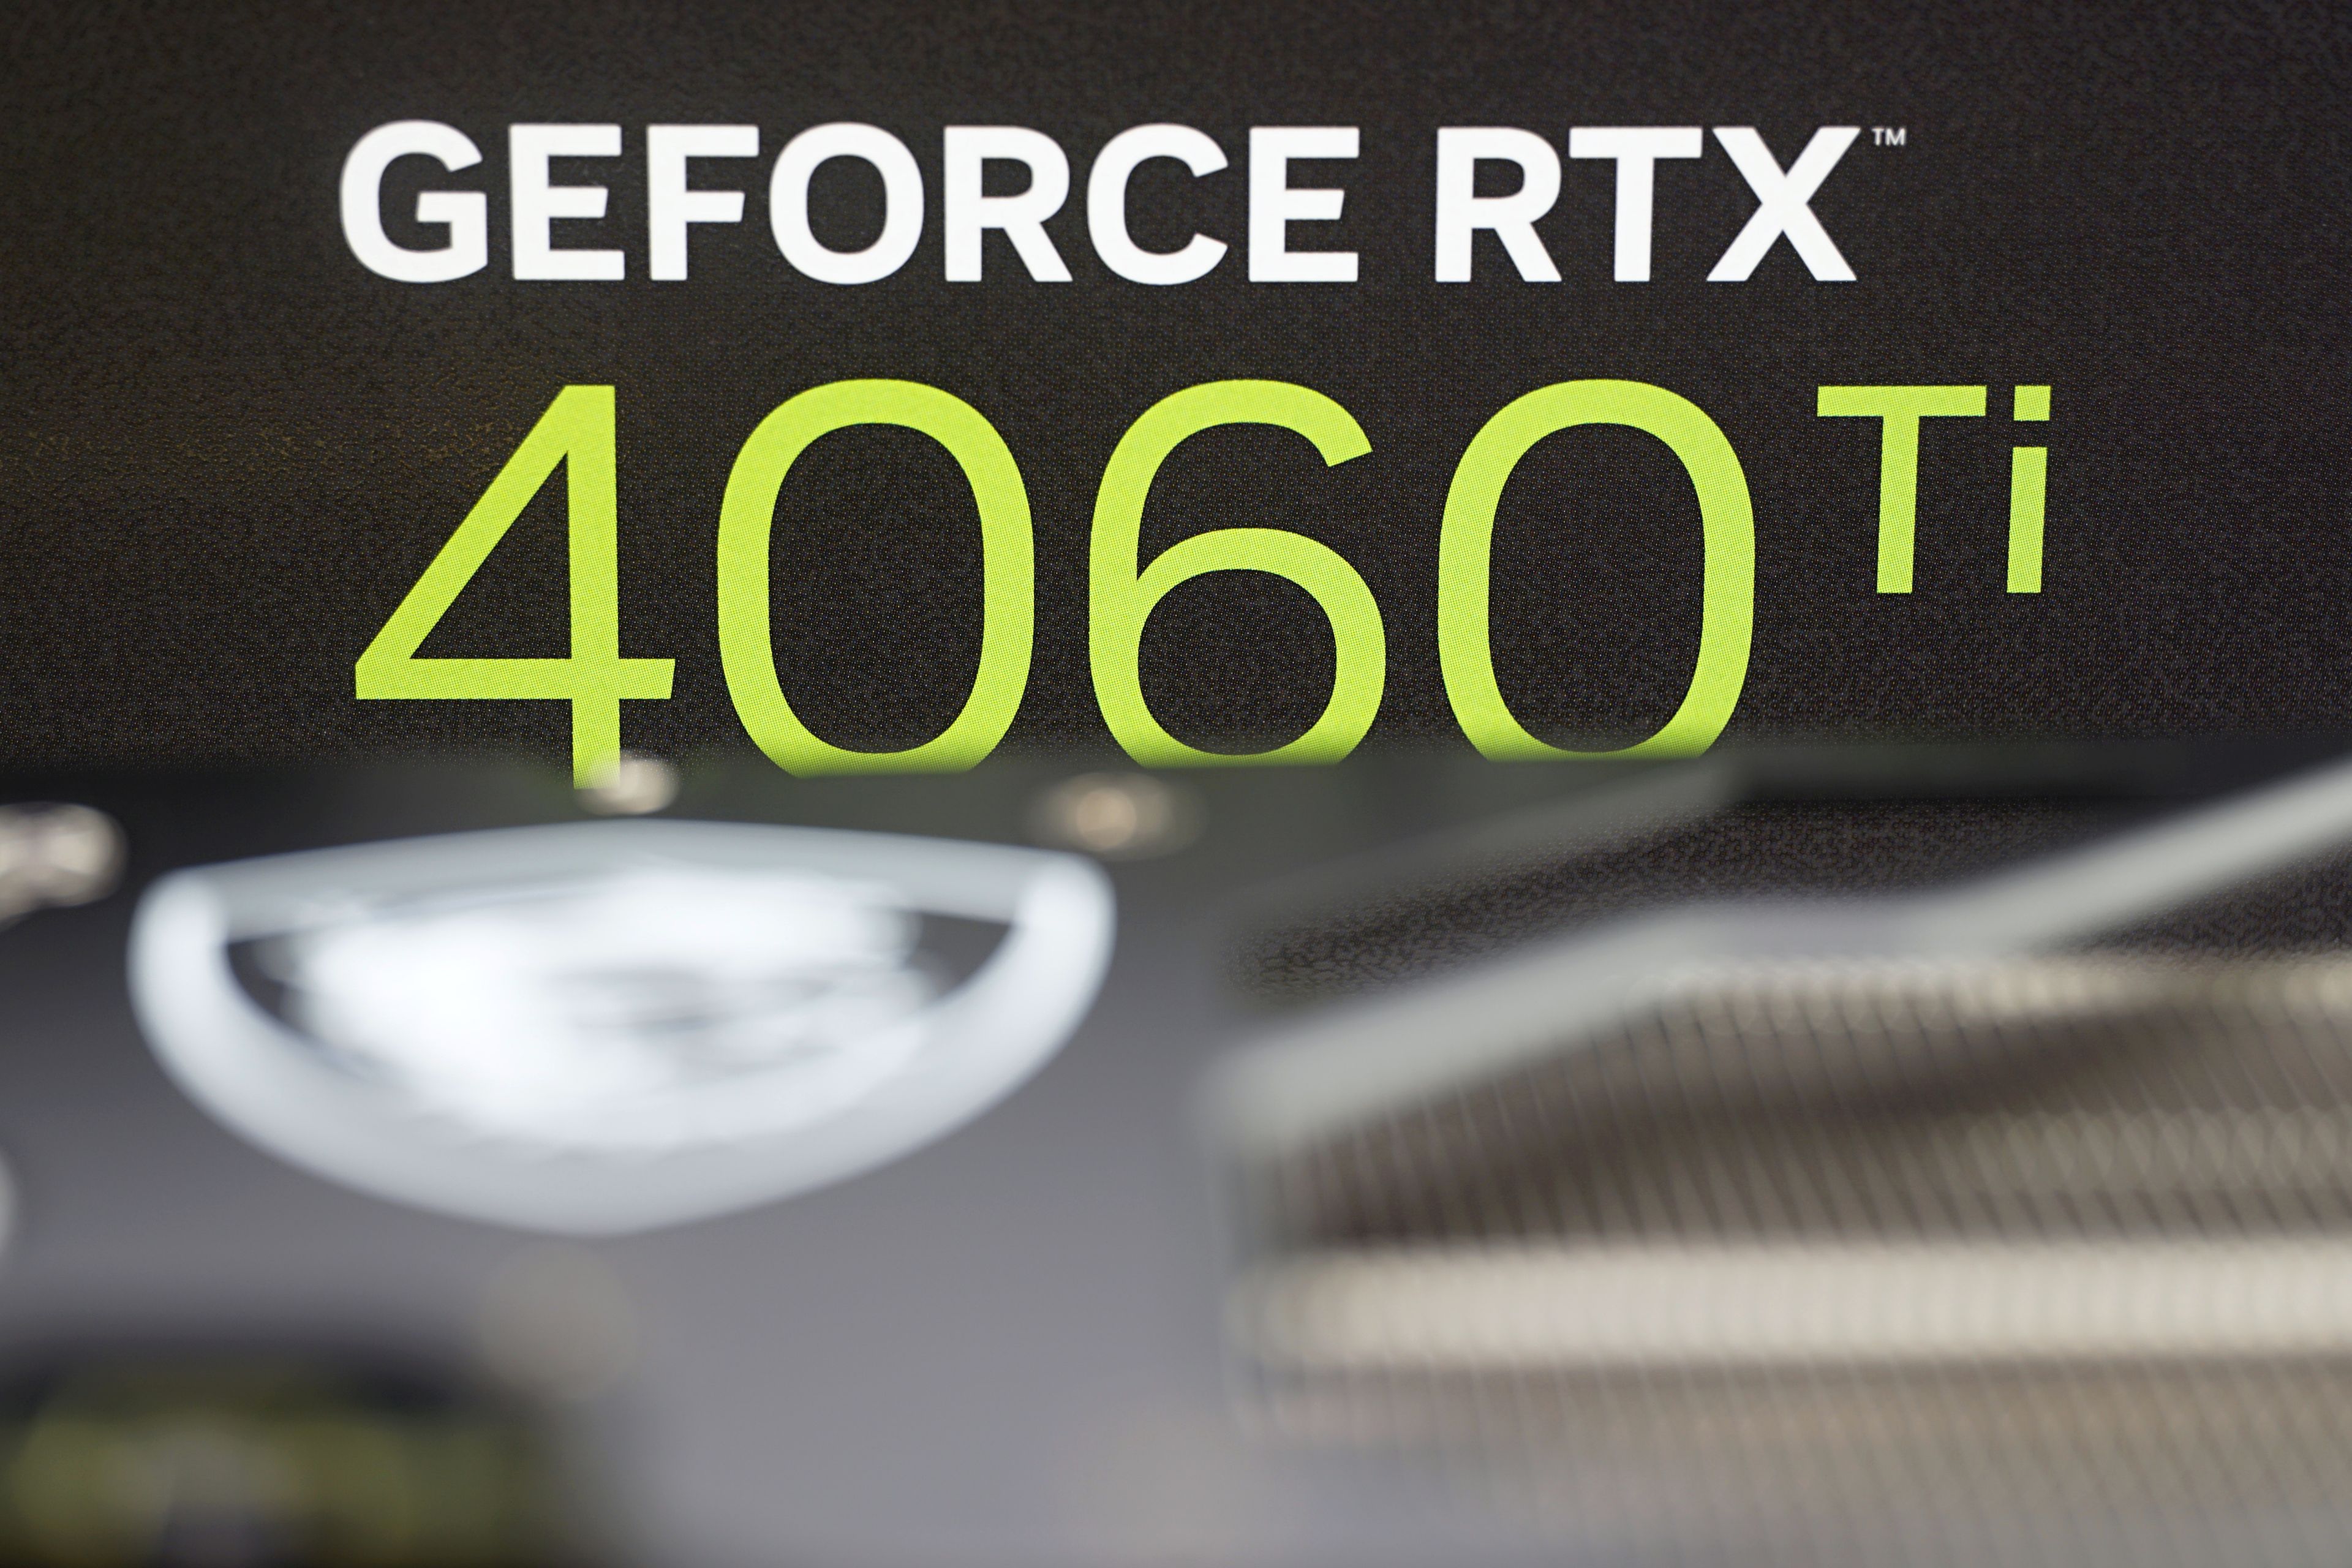 RTX 4060 Ti 8GB vs RTX 4060 Ti 16GB - Test in 10 Games 